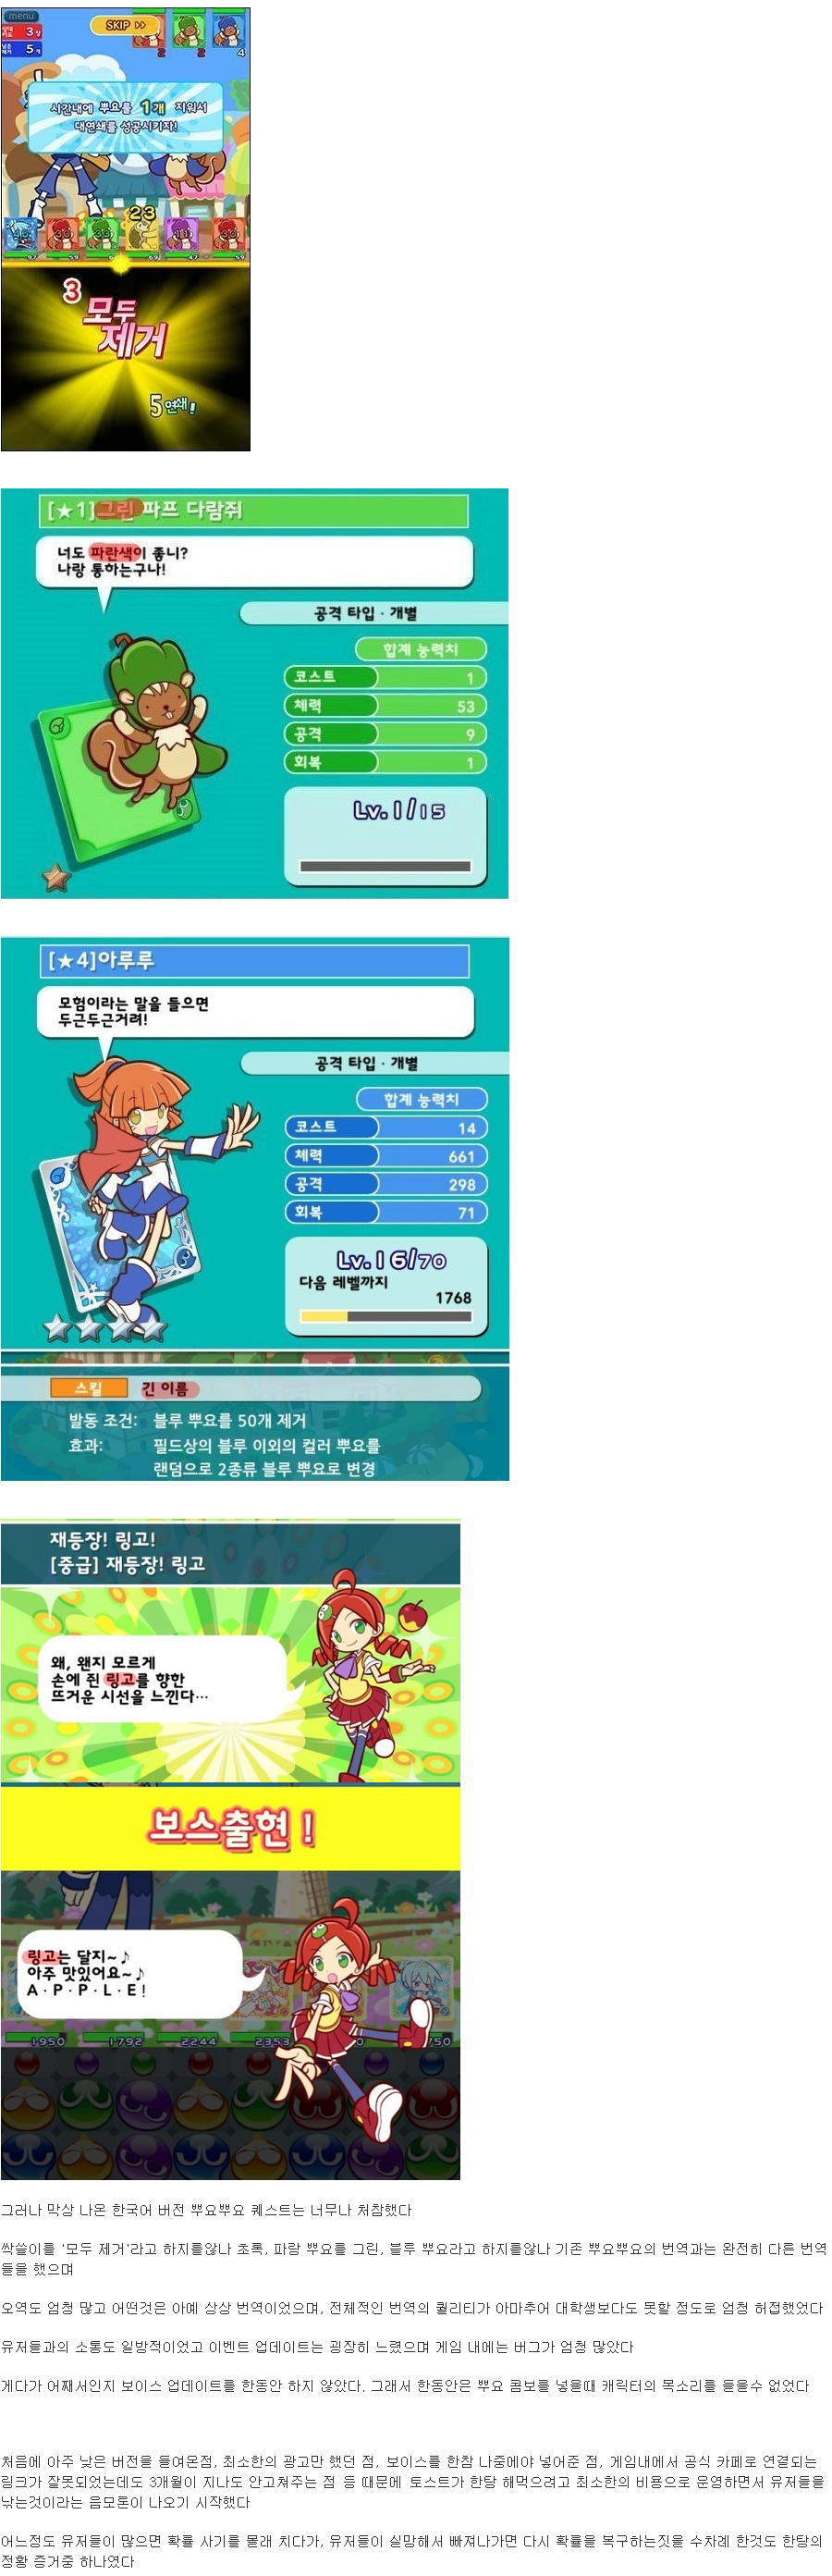 Screenshot_2021-04-07 토스트 한뿌퀘 먹튀 사건 txt - 초개념 갤러리(1).png